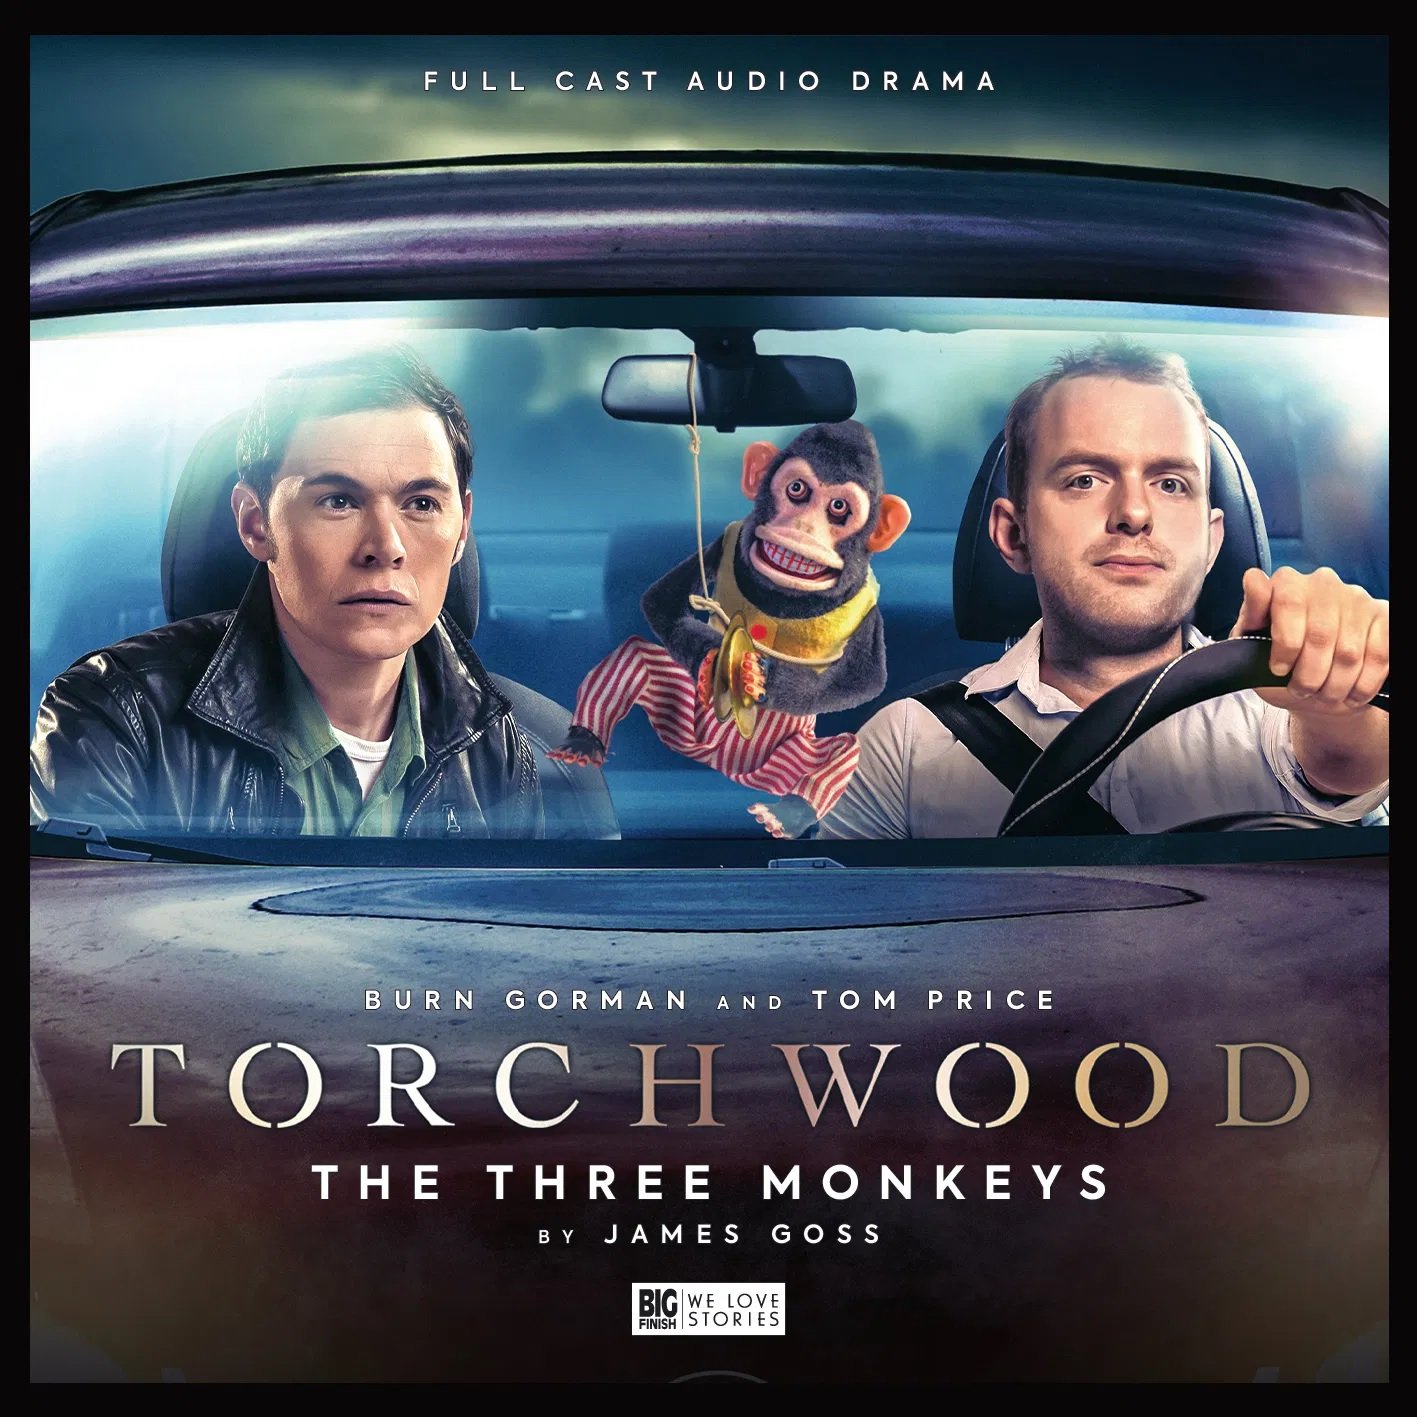 Reviewed: Big Finish’s Torchwood – The Three Monkeys